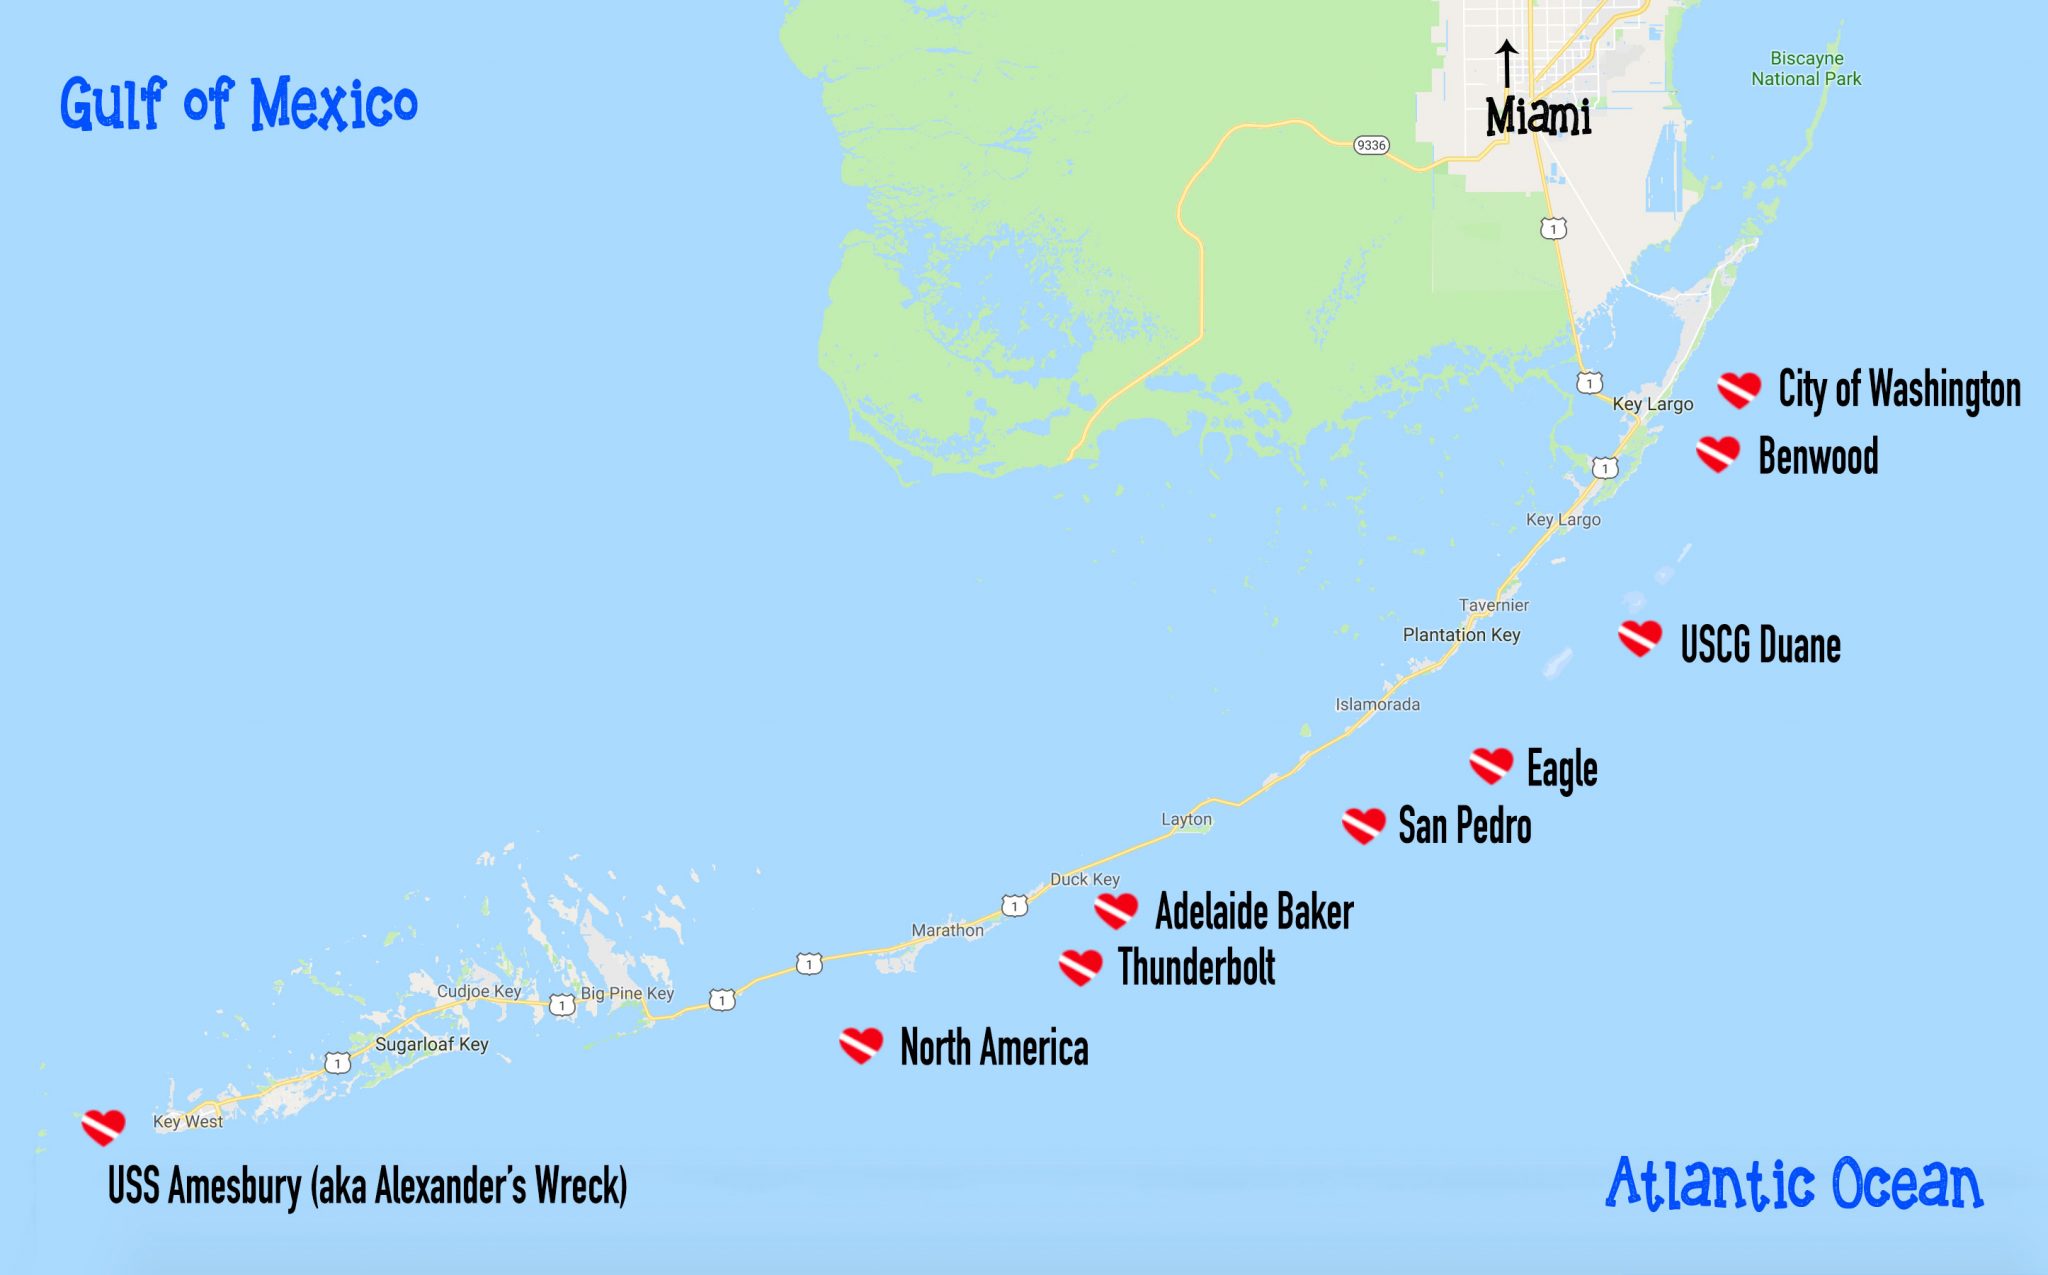 Florida Keys Shipwreck Trail Dive Sites In Southern Florida, USA